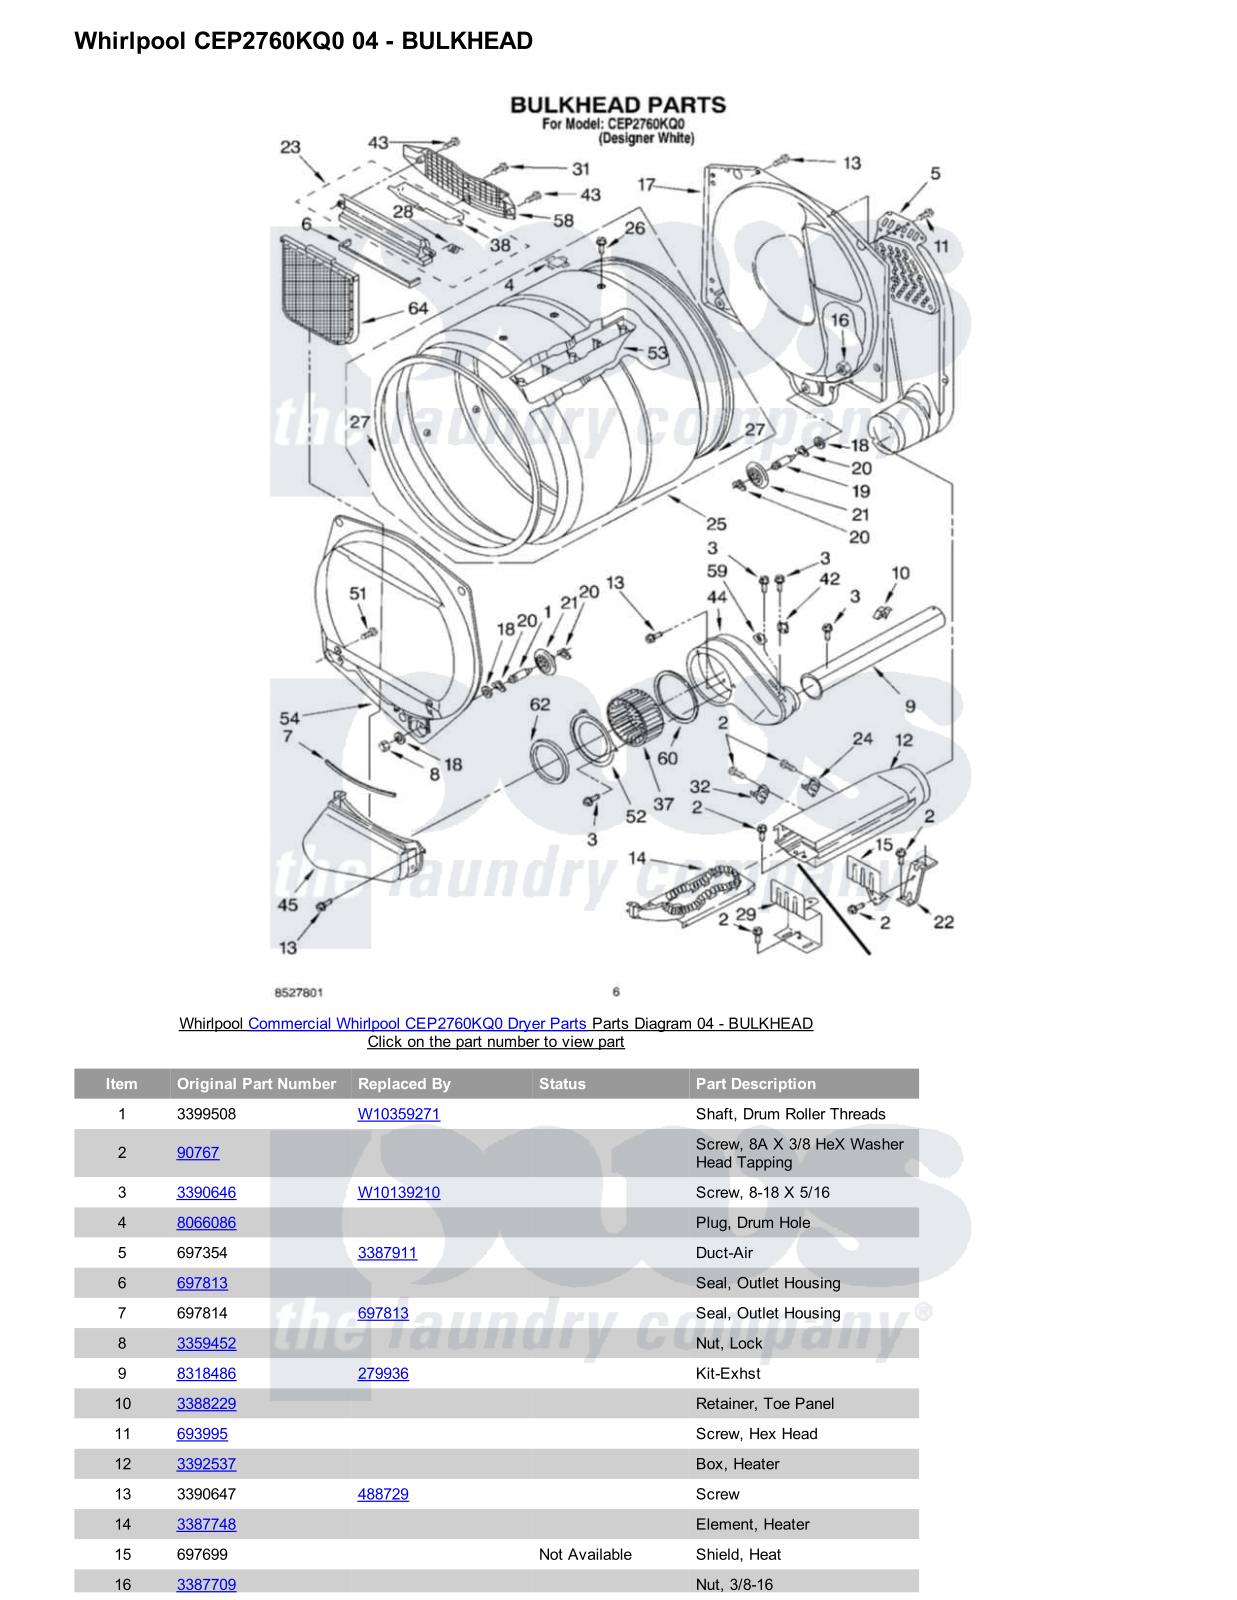 Whirlpool CEP2760KQ0 Parts Diagram